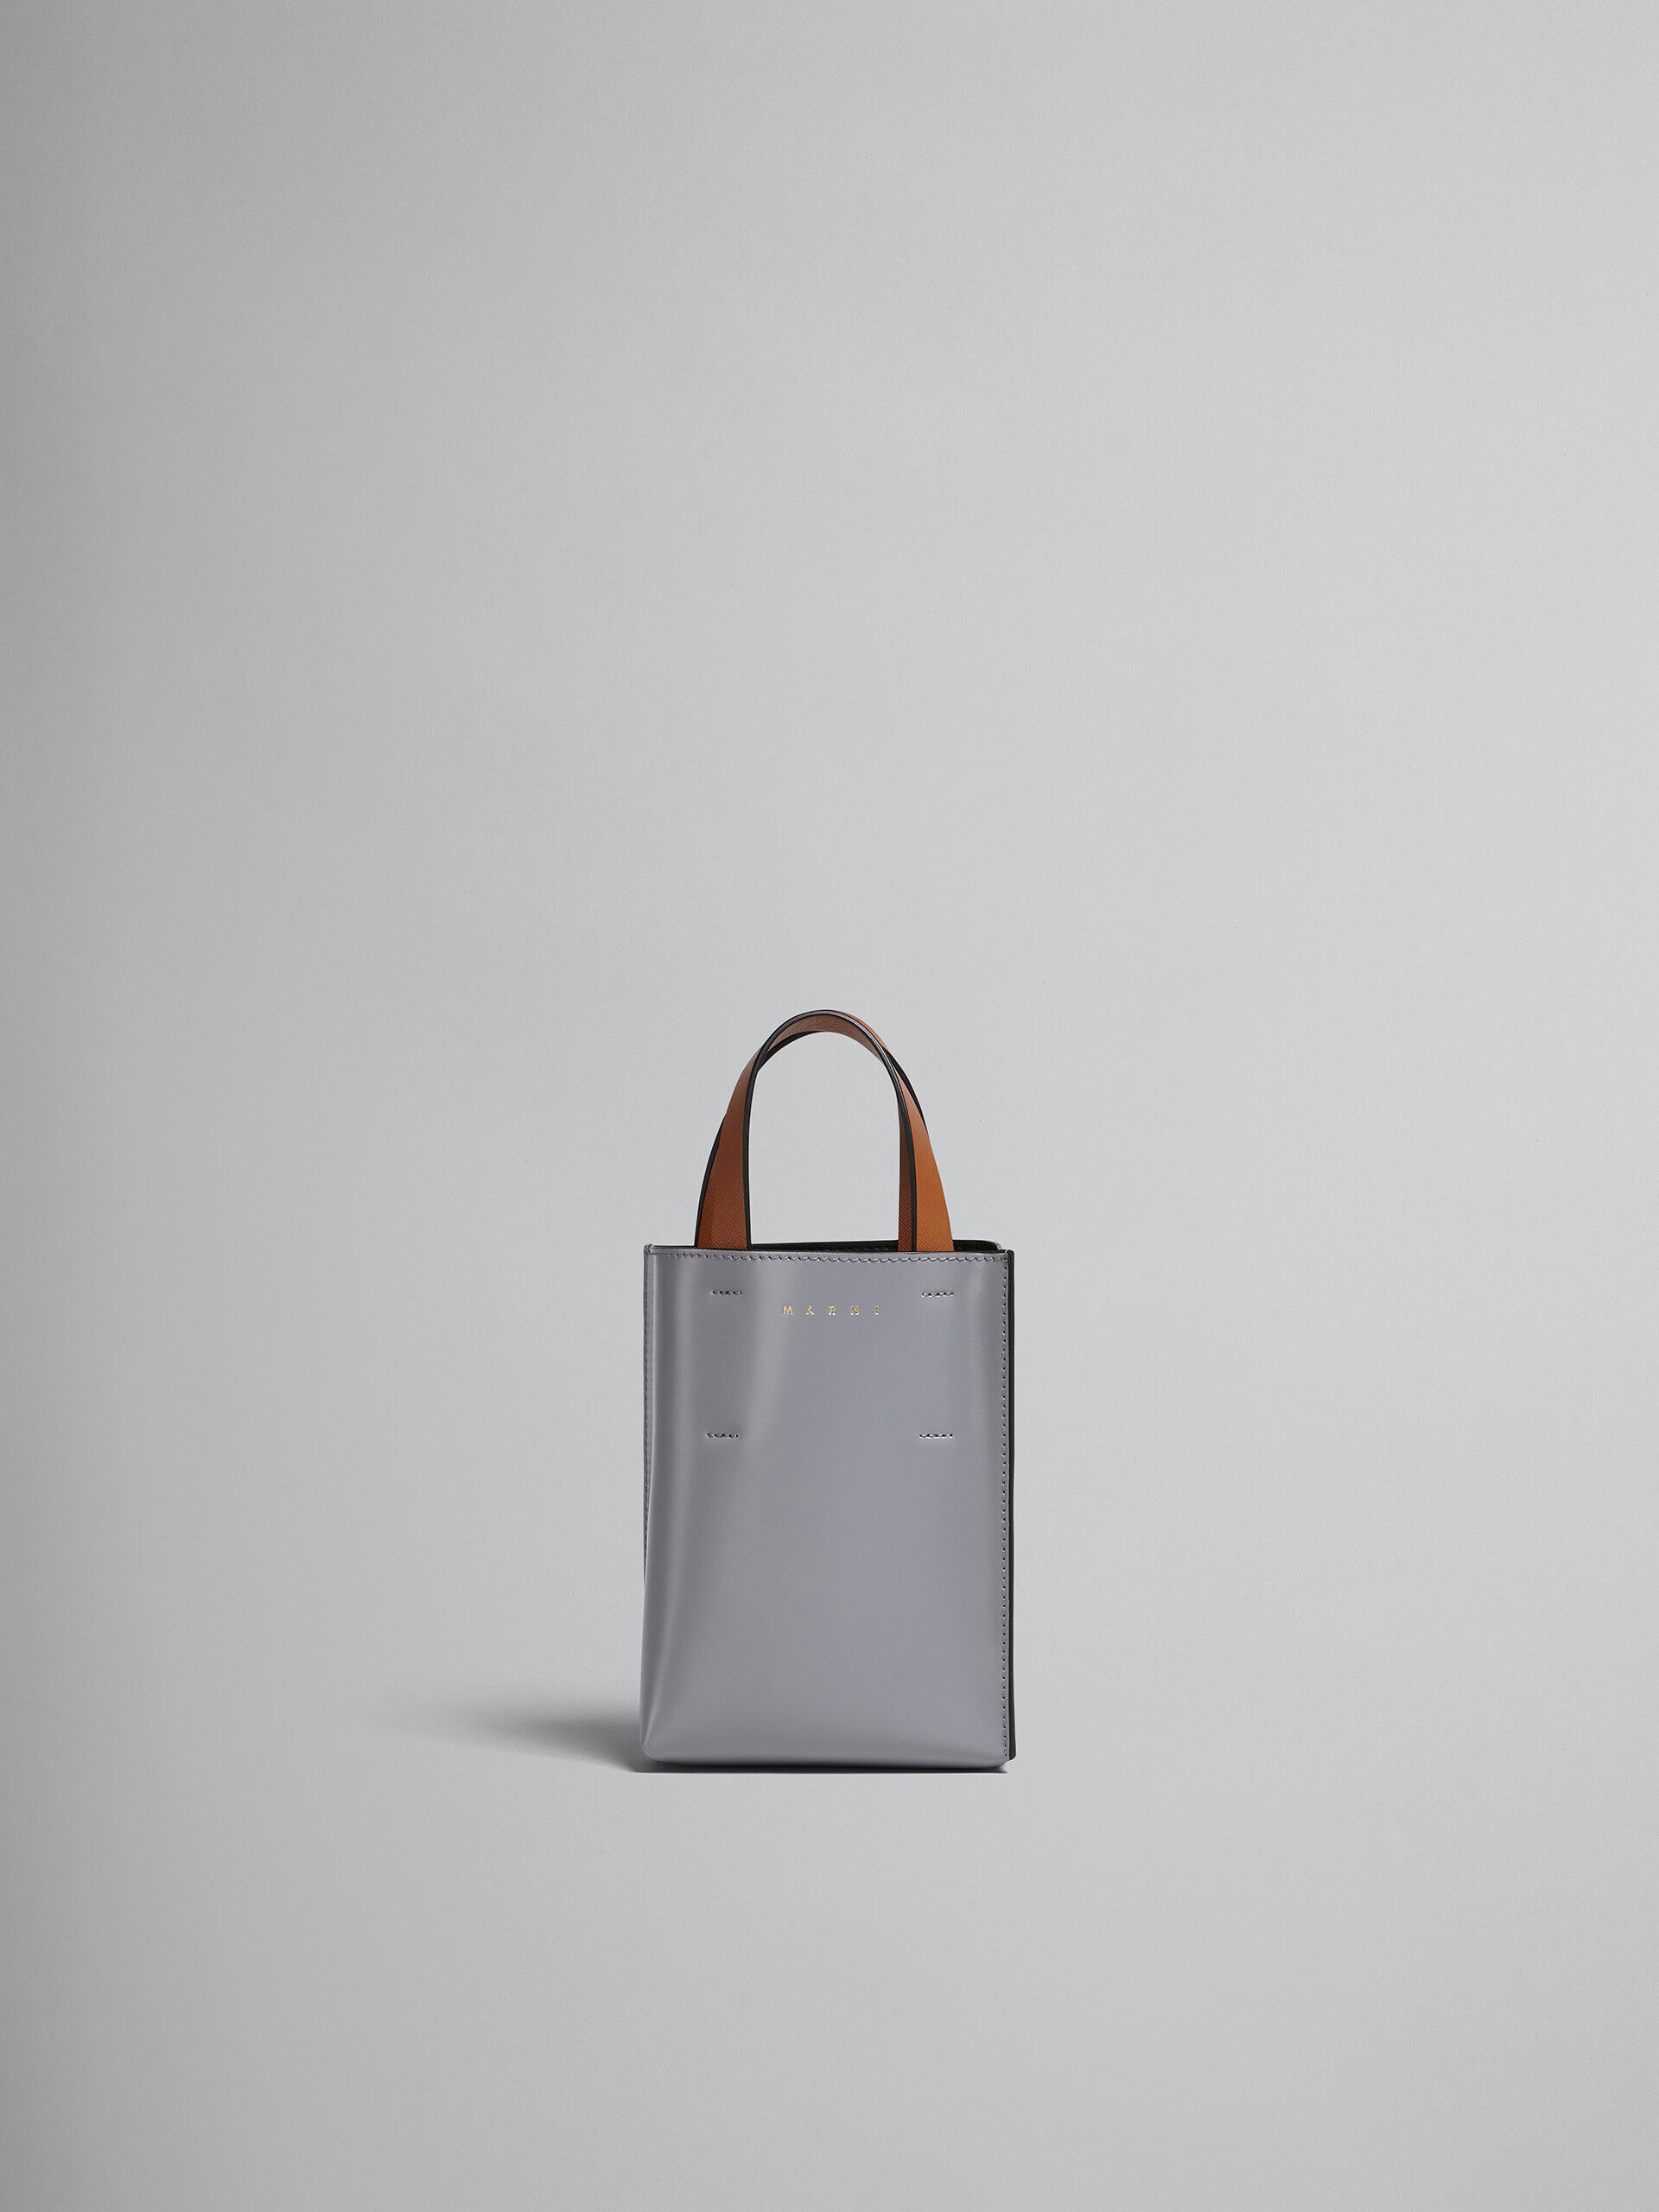 MUSEO nano bag in grey and purple leather | Marni